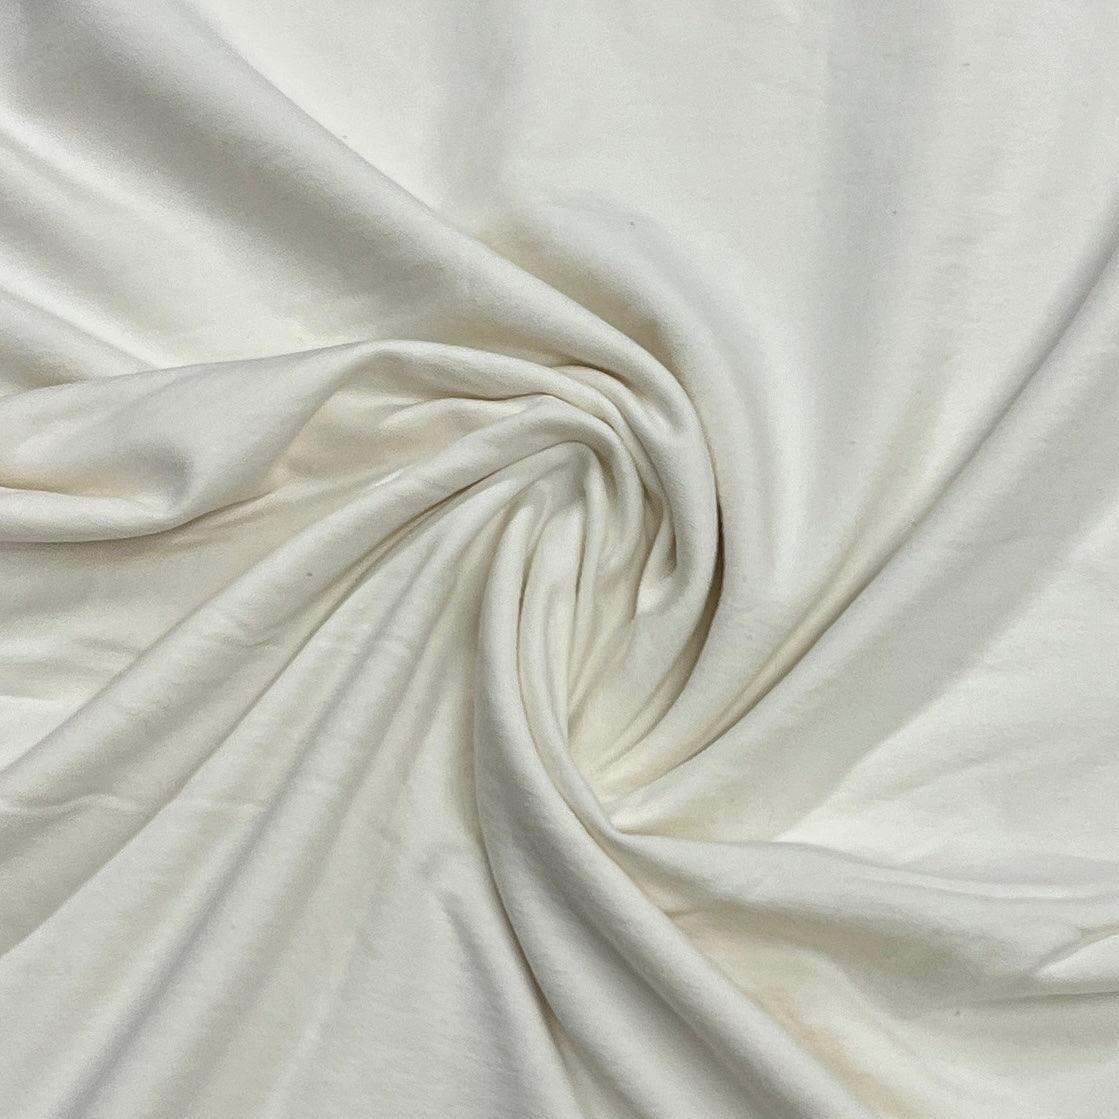 Bamboo Hemp Stretch Fleece Fabric - 340 GSM, $13.83/yd - Rolls - Nature's Fabrics